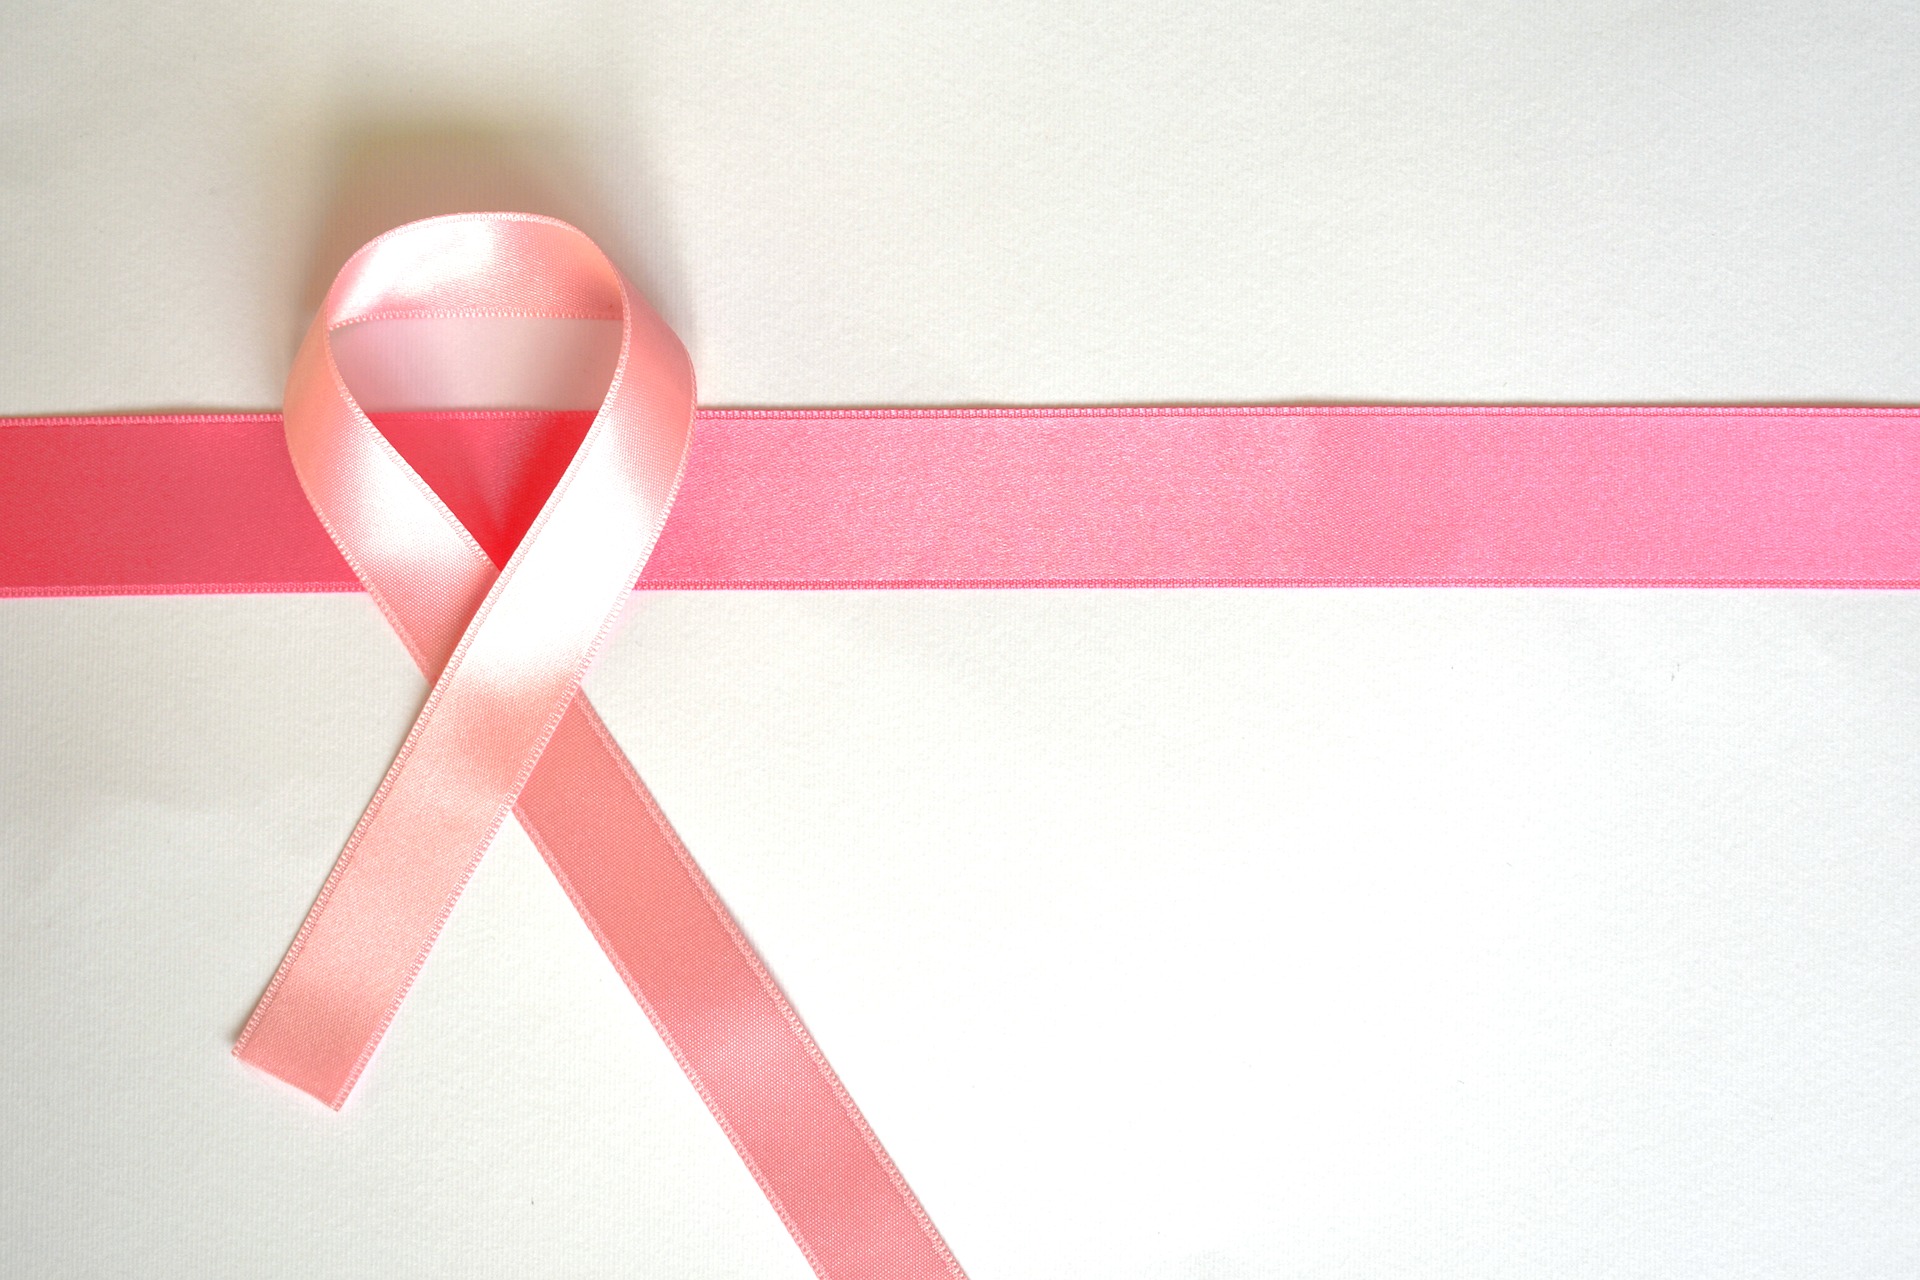 Smart Bra: The painless alternative to the mammogram